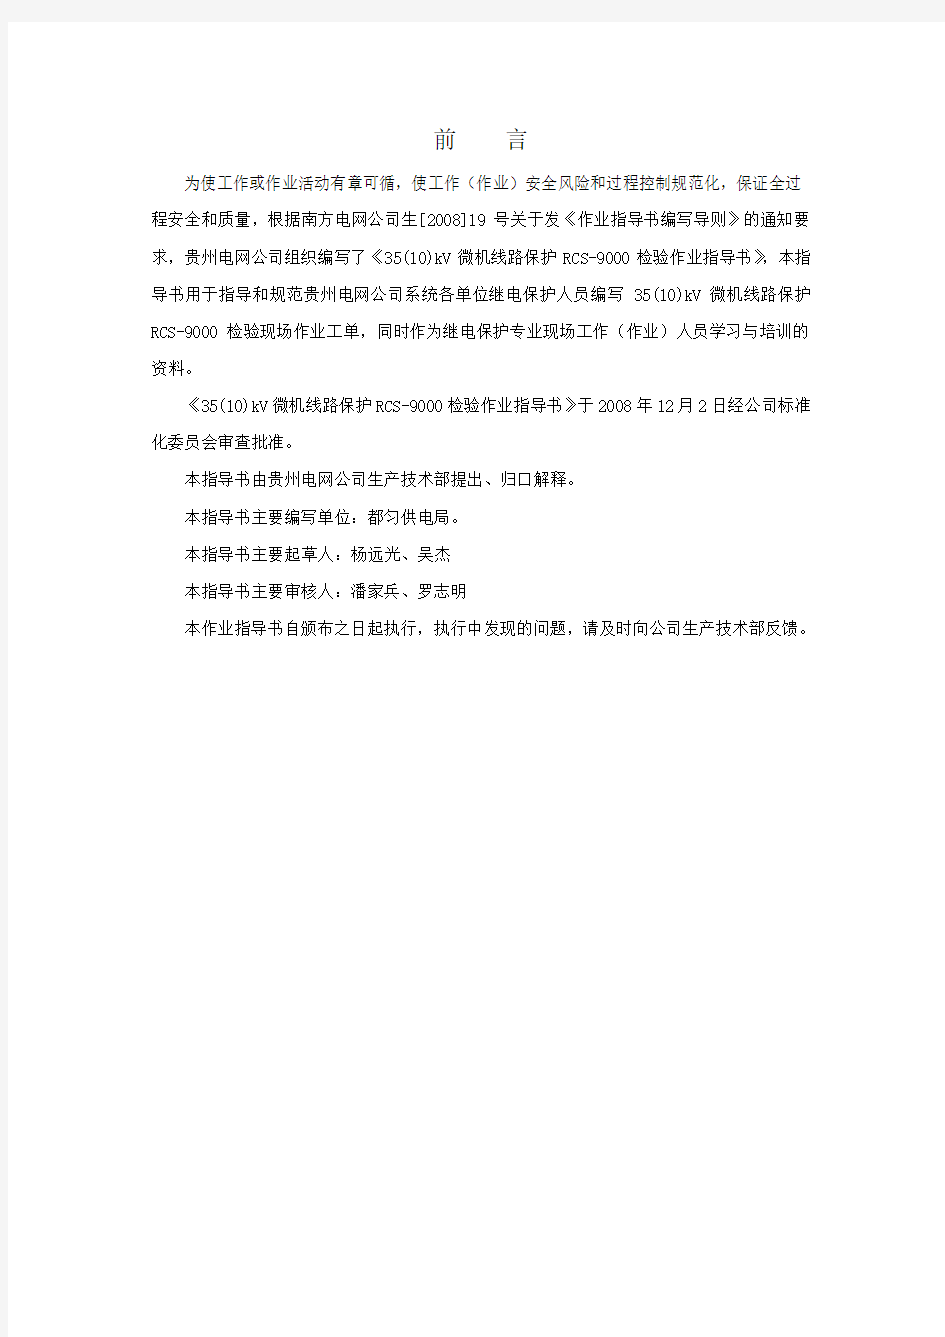 10kV线路保护南京南瑞RCS-9000系列作业指导书